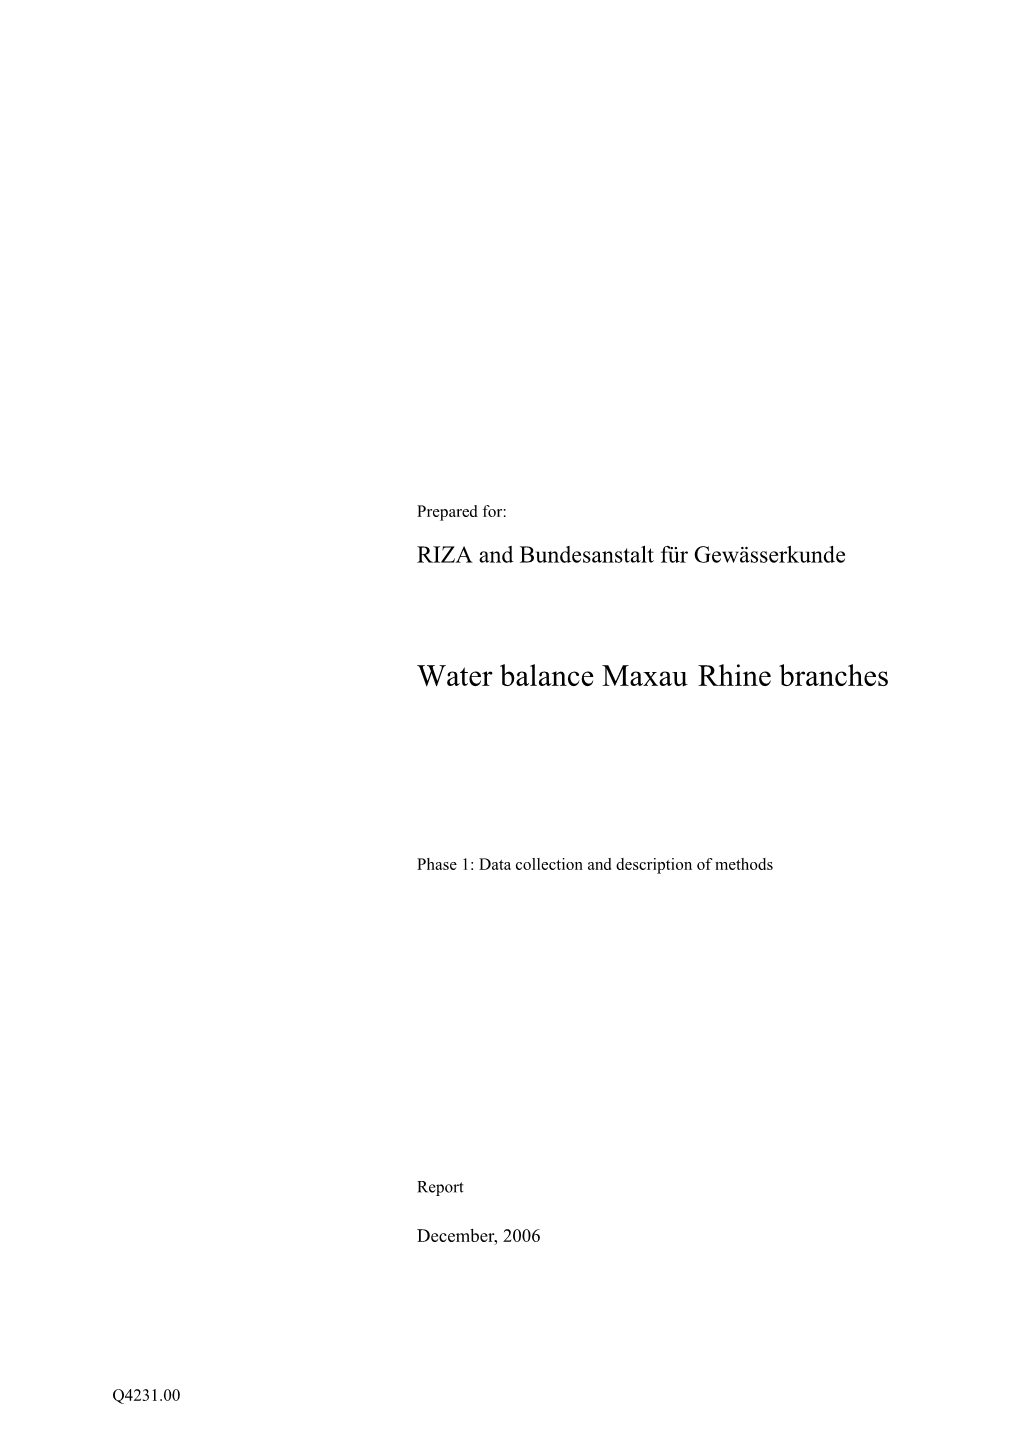 Water Balance Maxau-Rhine Branches